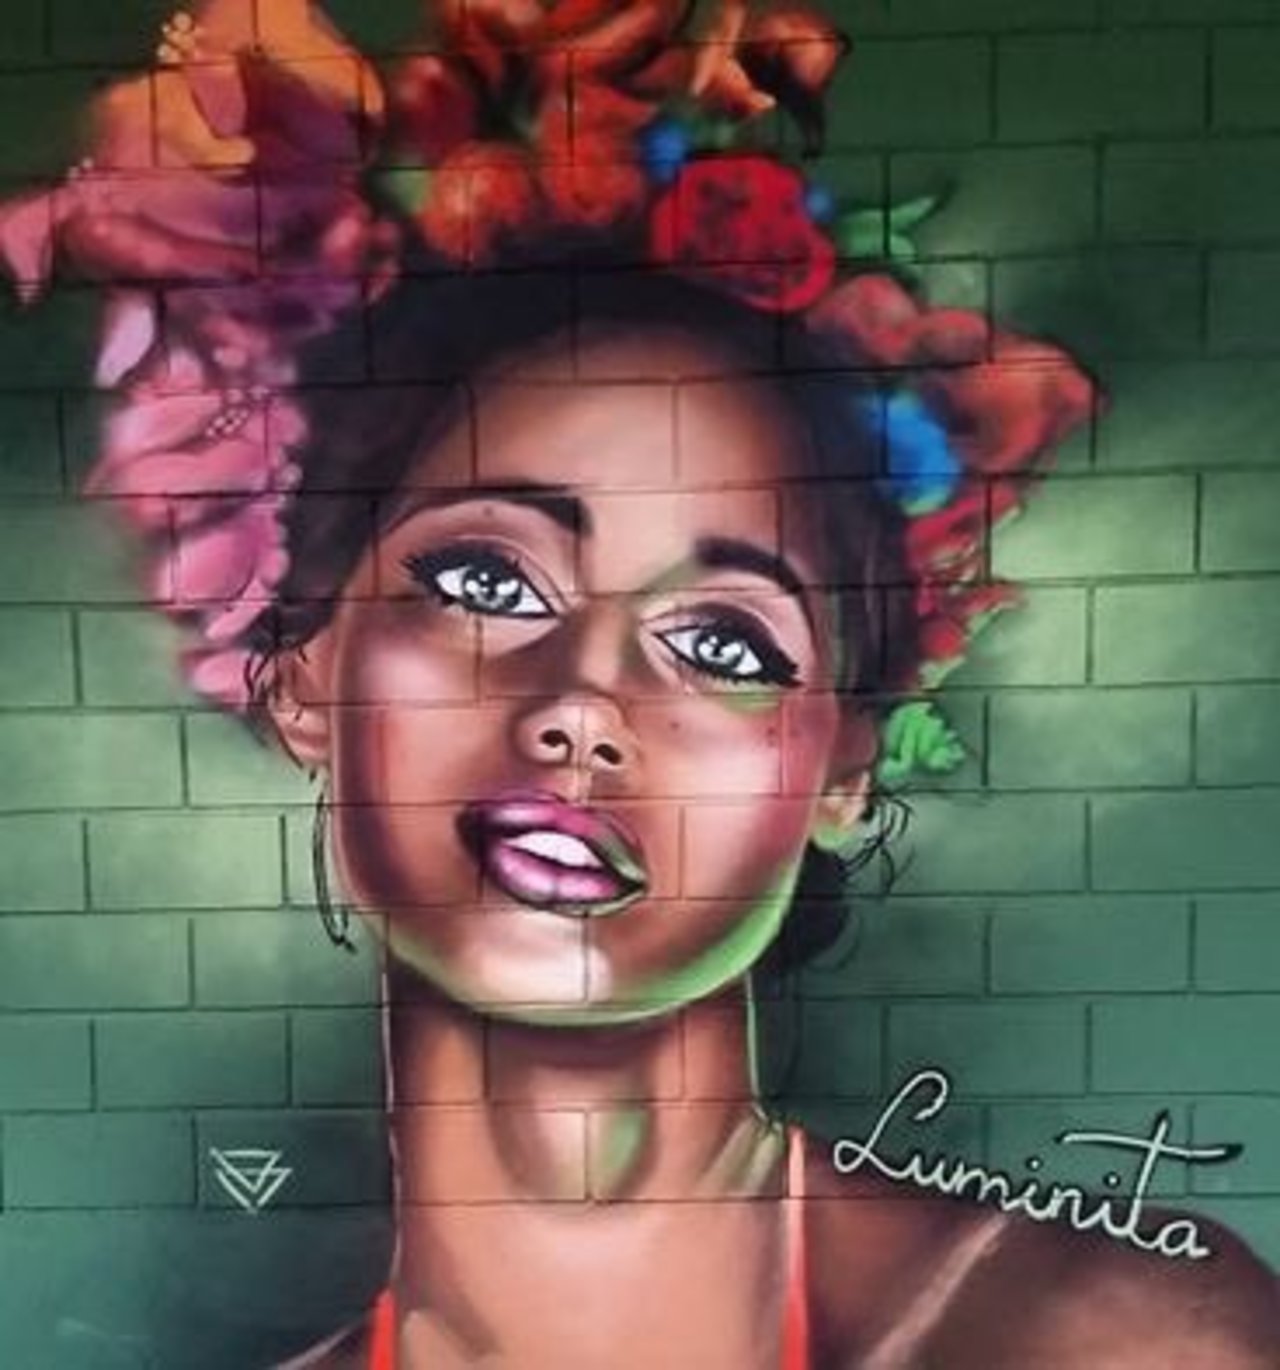 Simple beauty. Art by Xema Gonzales in Valencia, Spain #StreetArt #Art #Beauty #Lady #Flowers #Graffiti #Mural #Valencia #arteurbano #DesignThinking https://t.co/pynw6XvM52